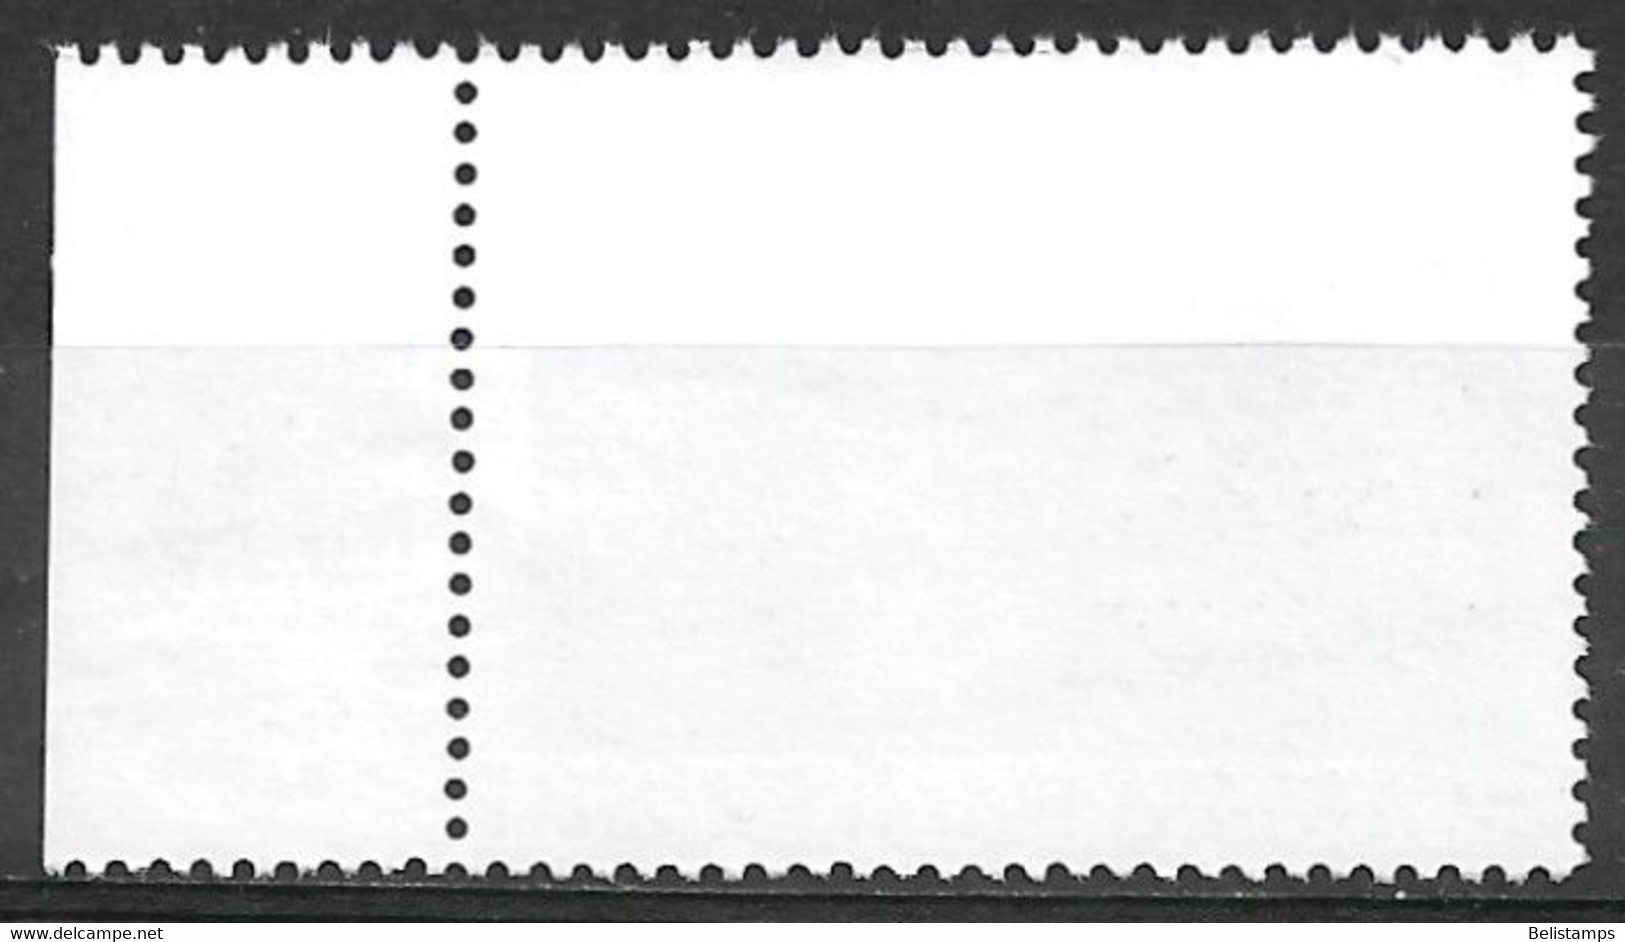 Hungary 2013. Scott #4263 (U) Richard Wagner (1813-83), Composer - Used Stamps